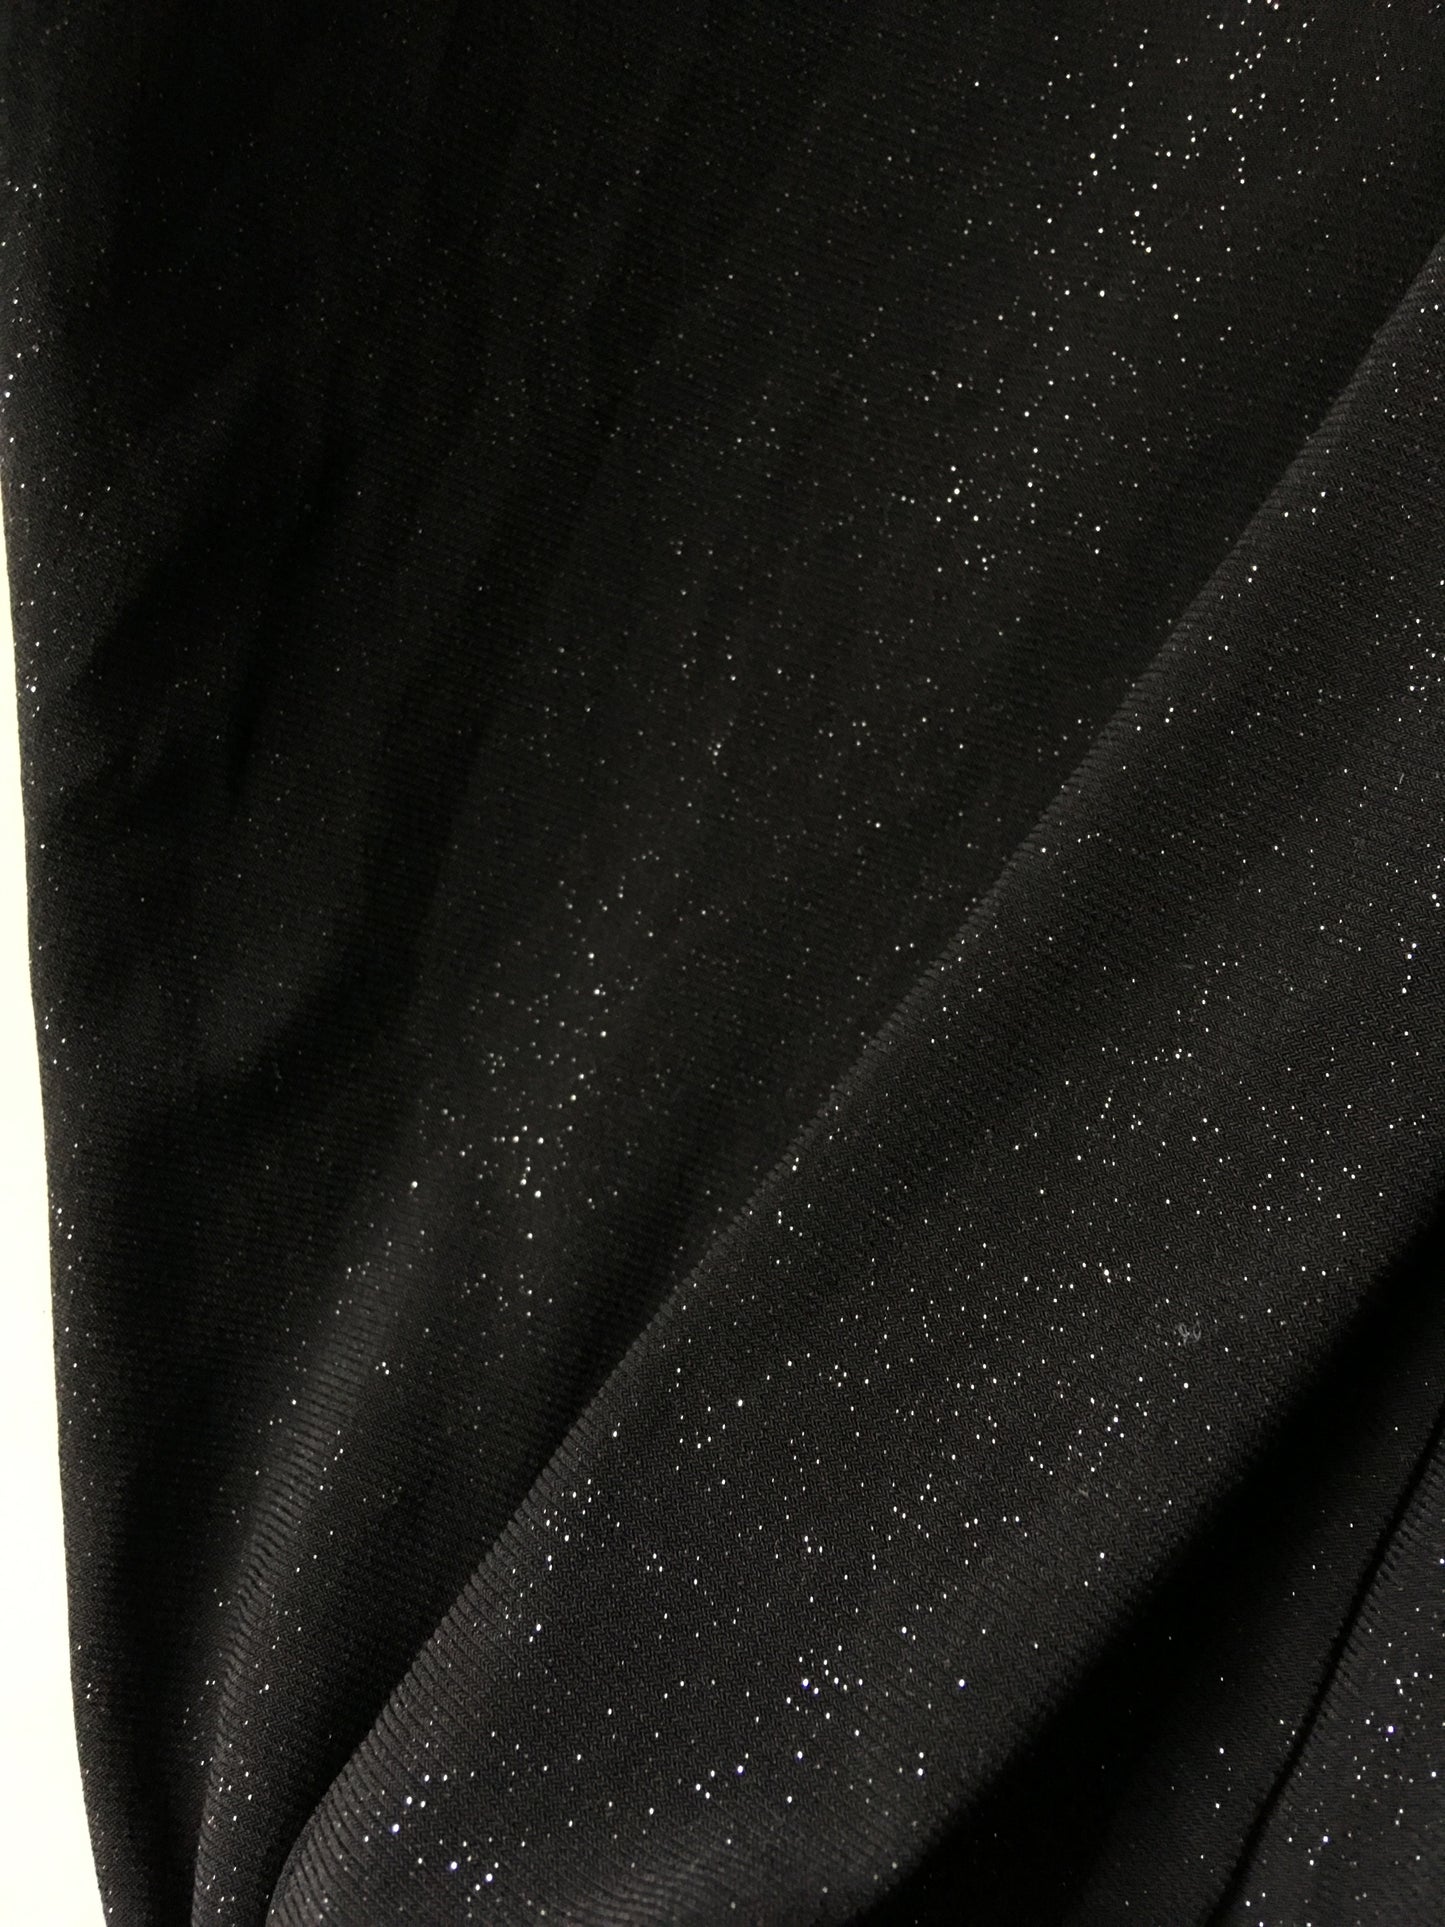 Black Shiny Dress